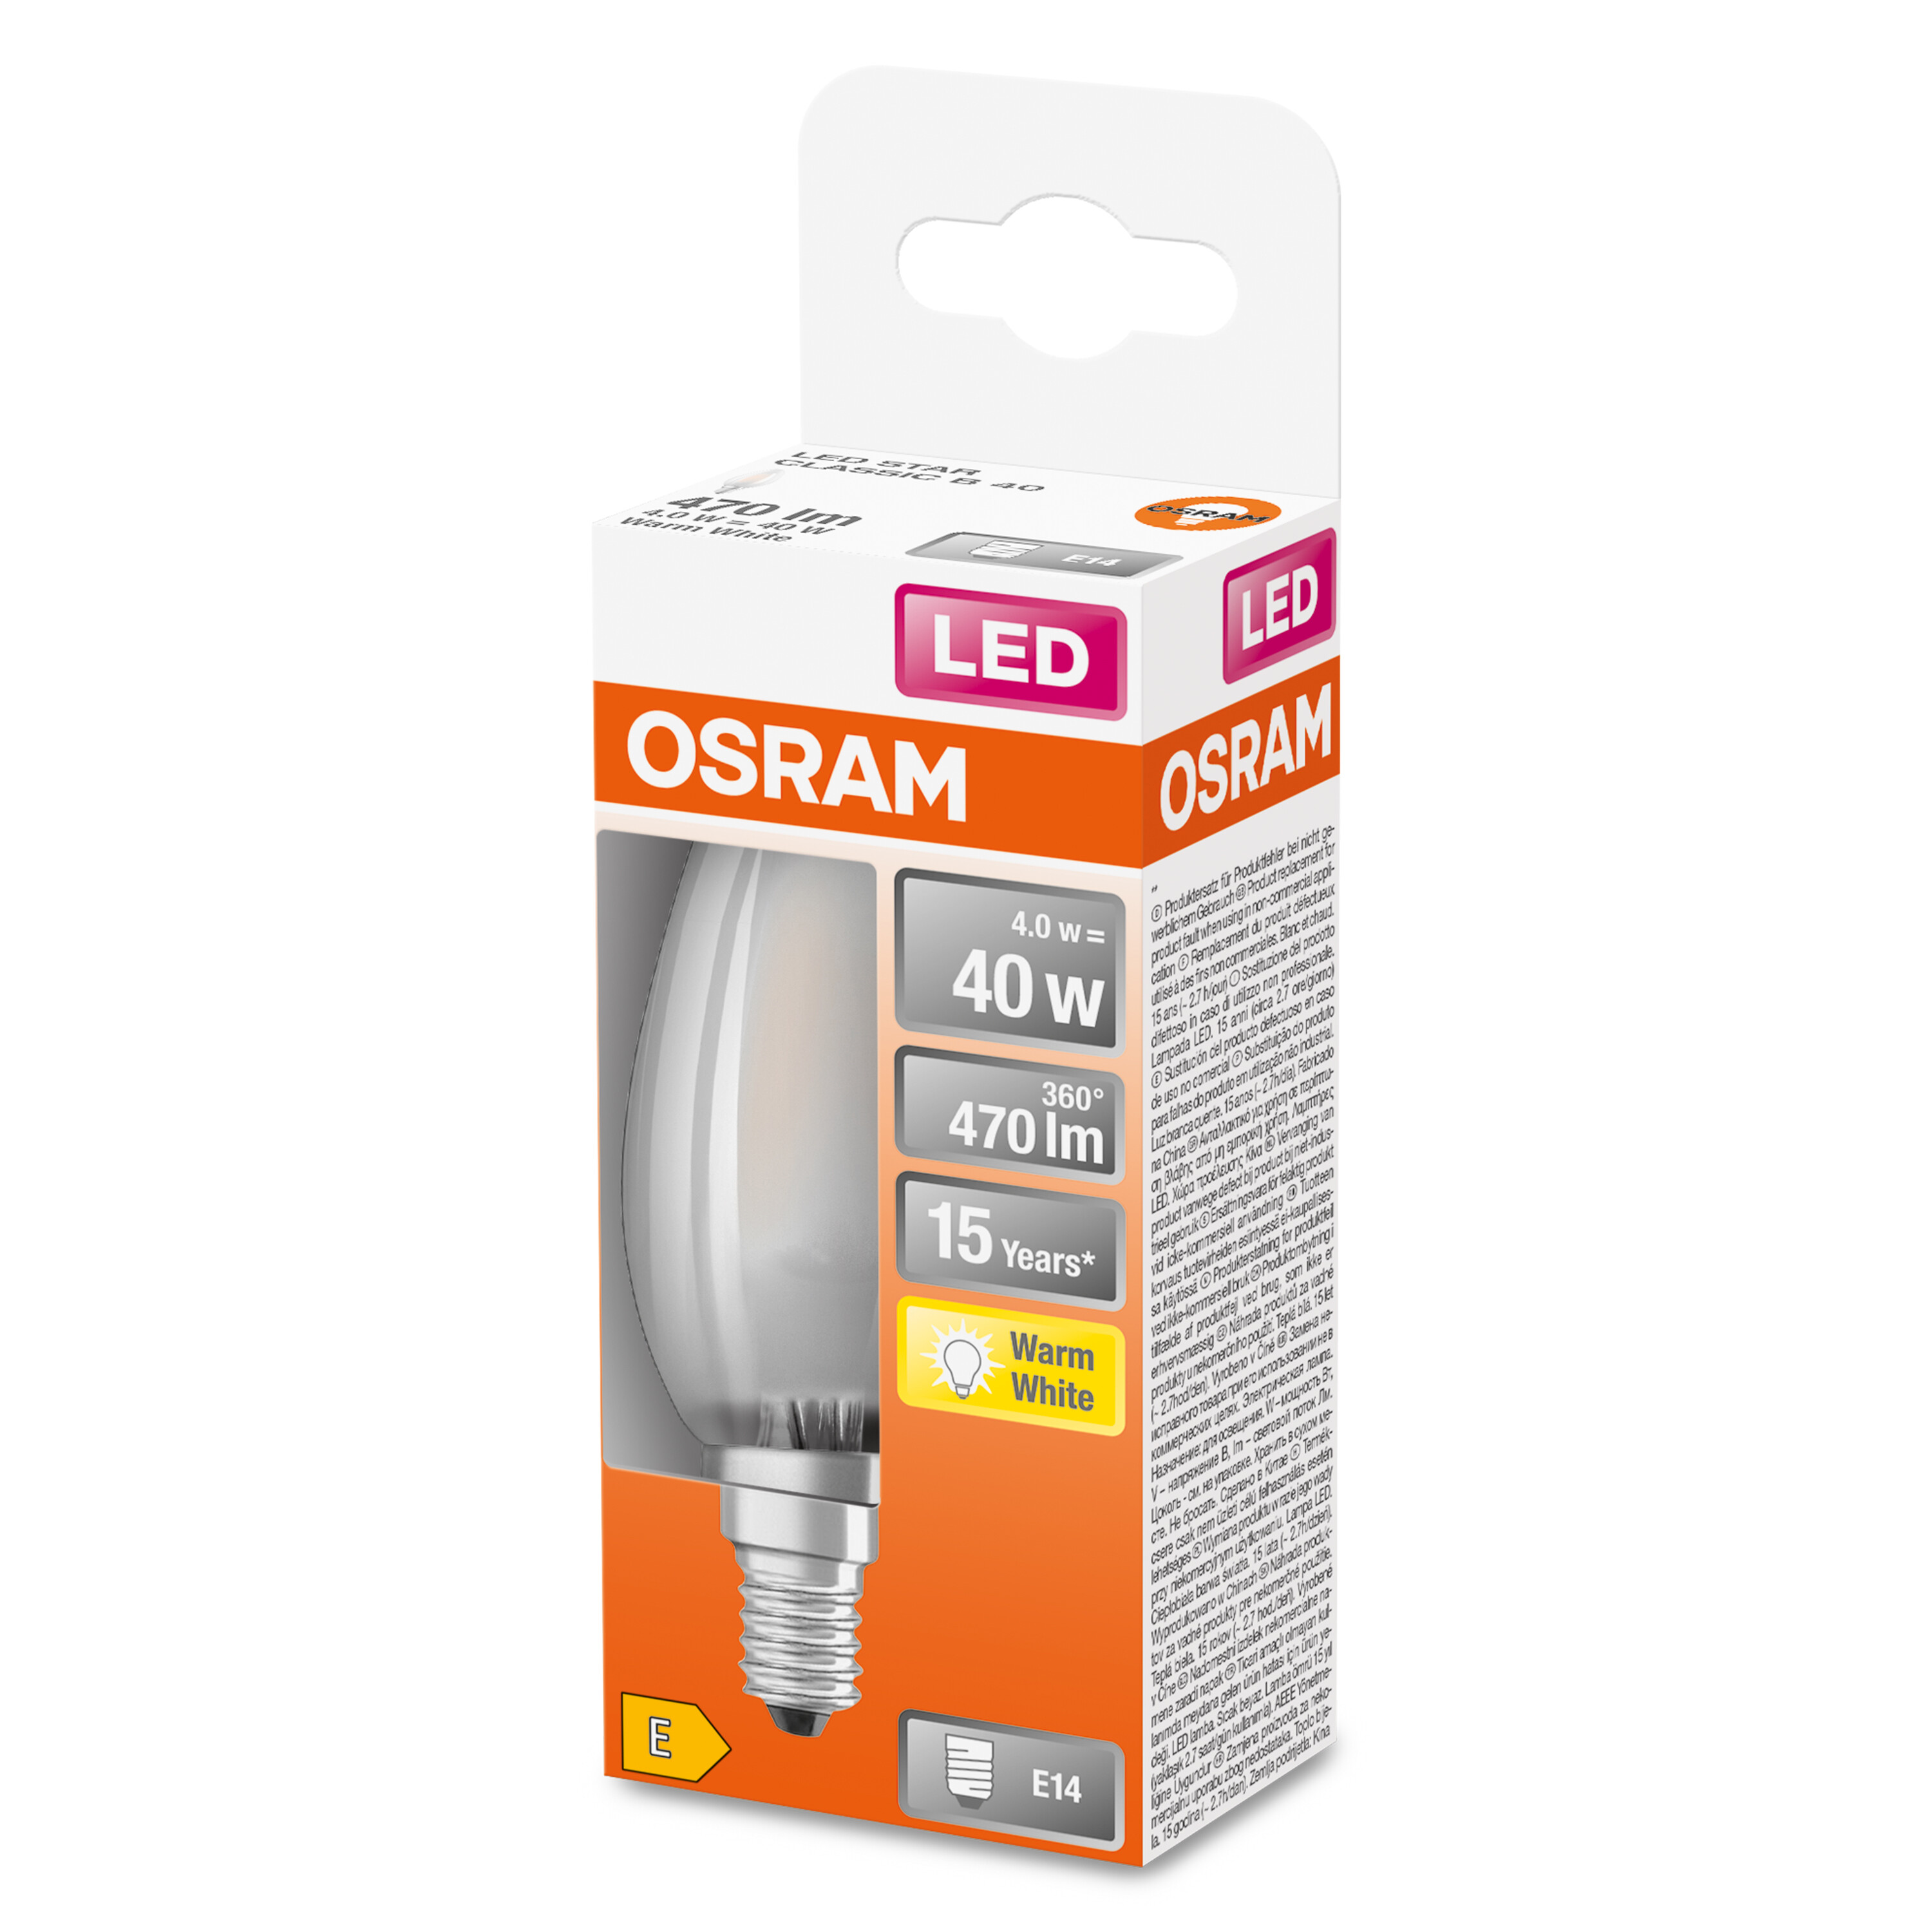 LED CLASSIC B Lumen OSRAM  Warmweiß 470 Lampe LED Retrofit